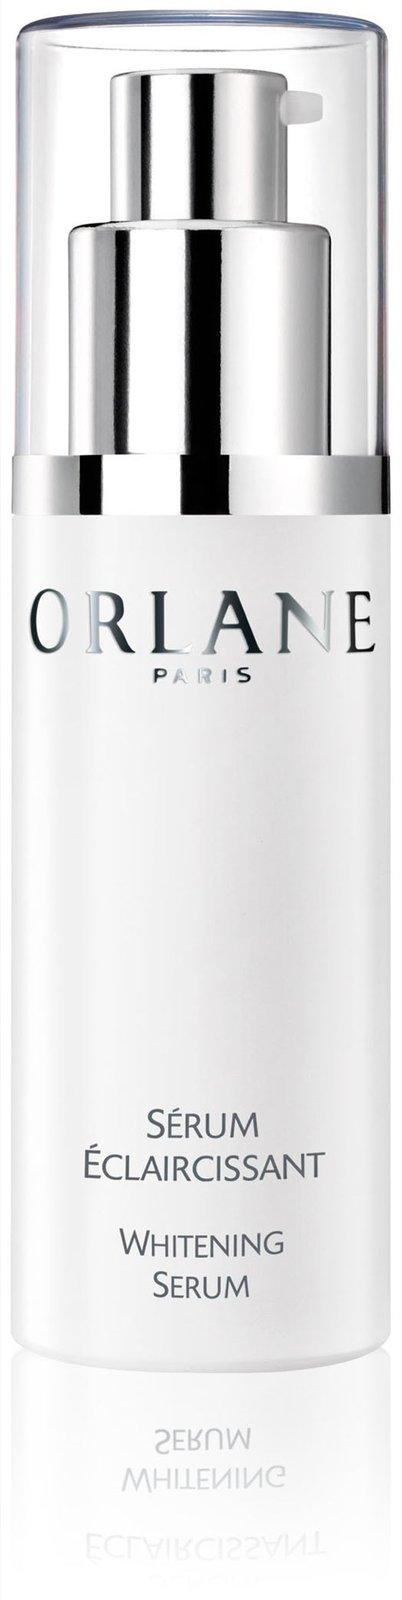 Orlane Paris Whitening Serum